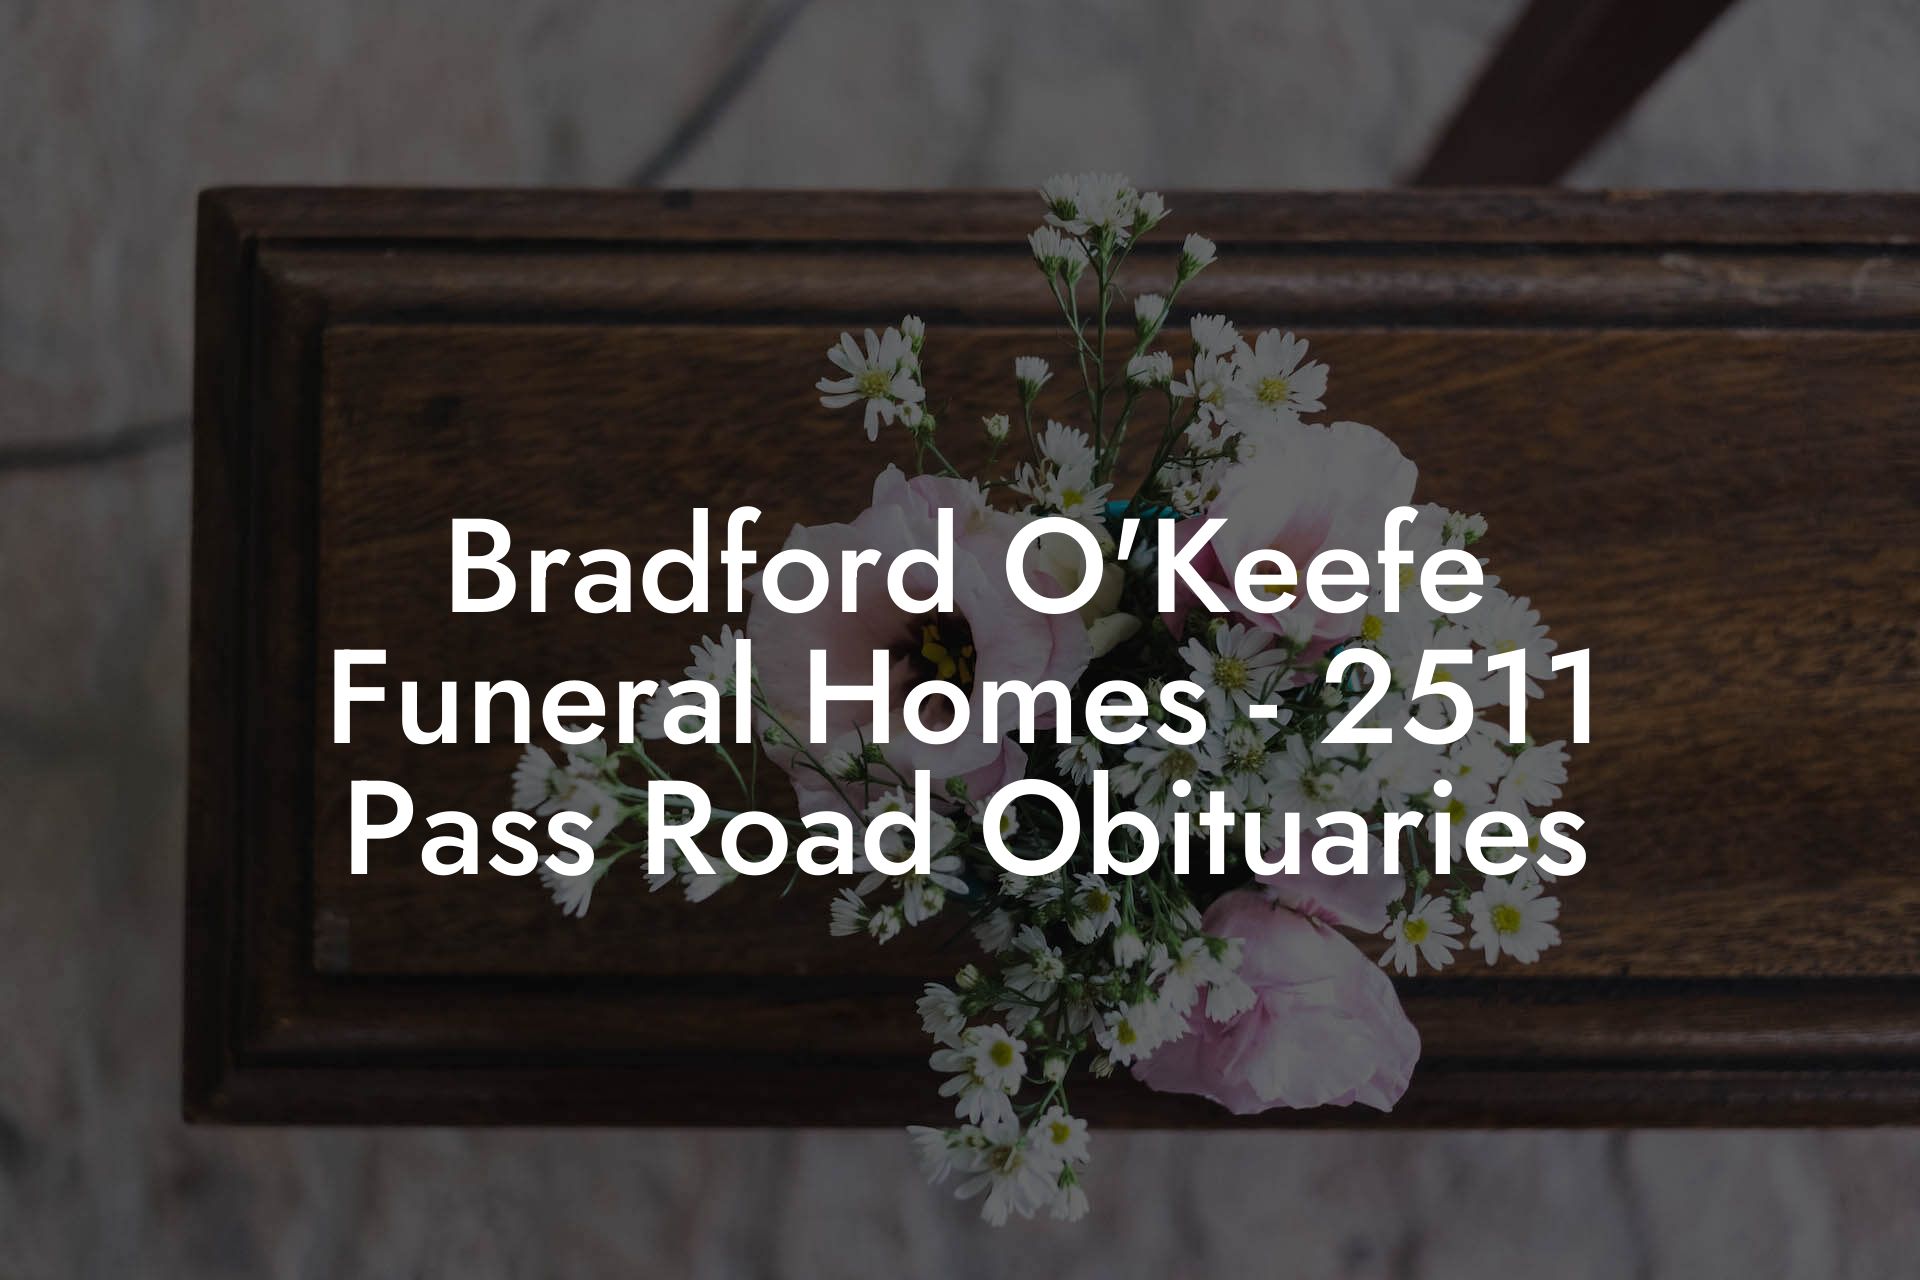 Bradford O'Keefe Funeral Homes - 2511 Pass Road Obituaries